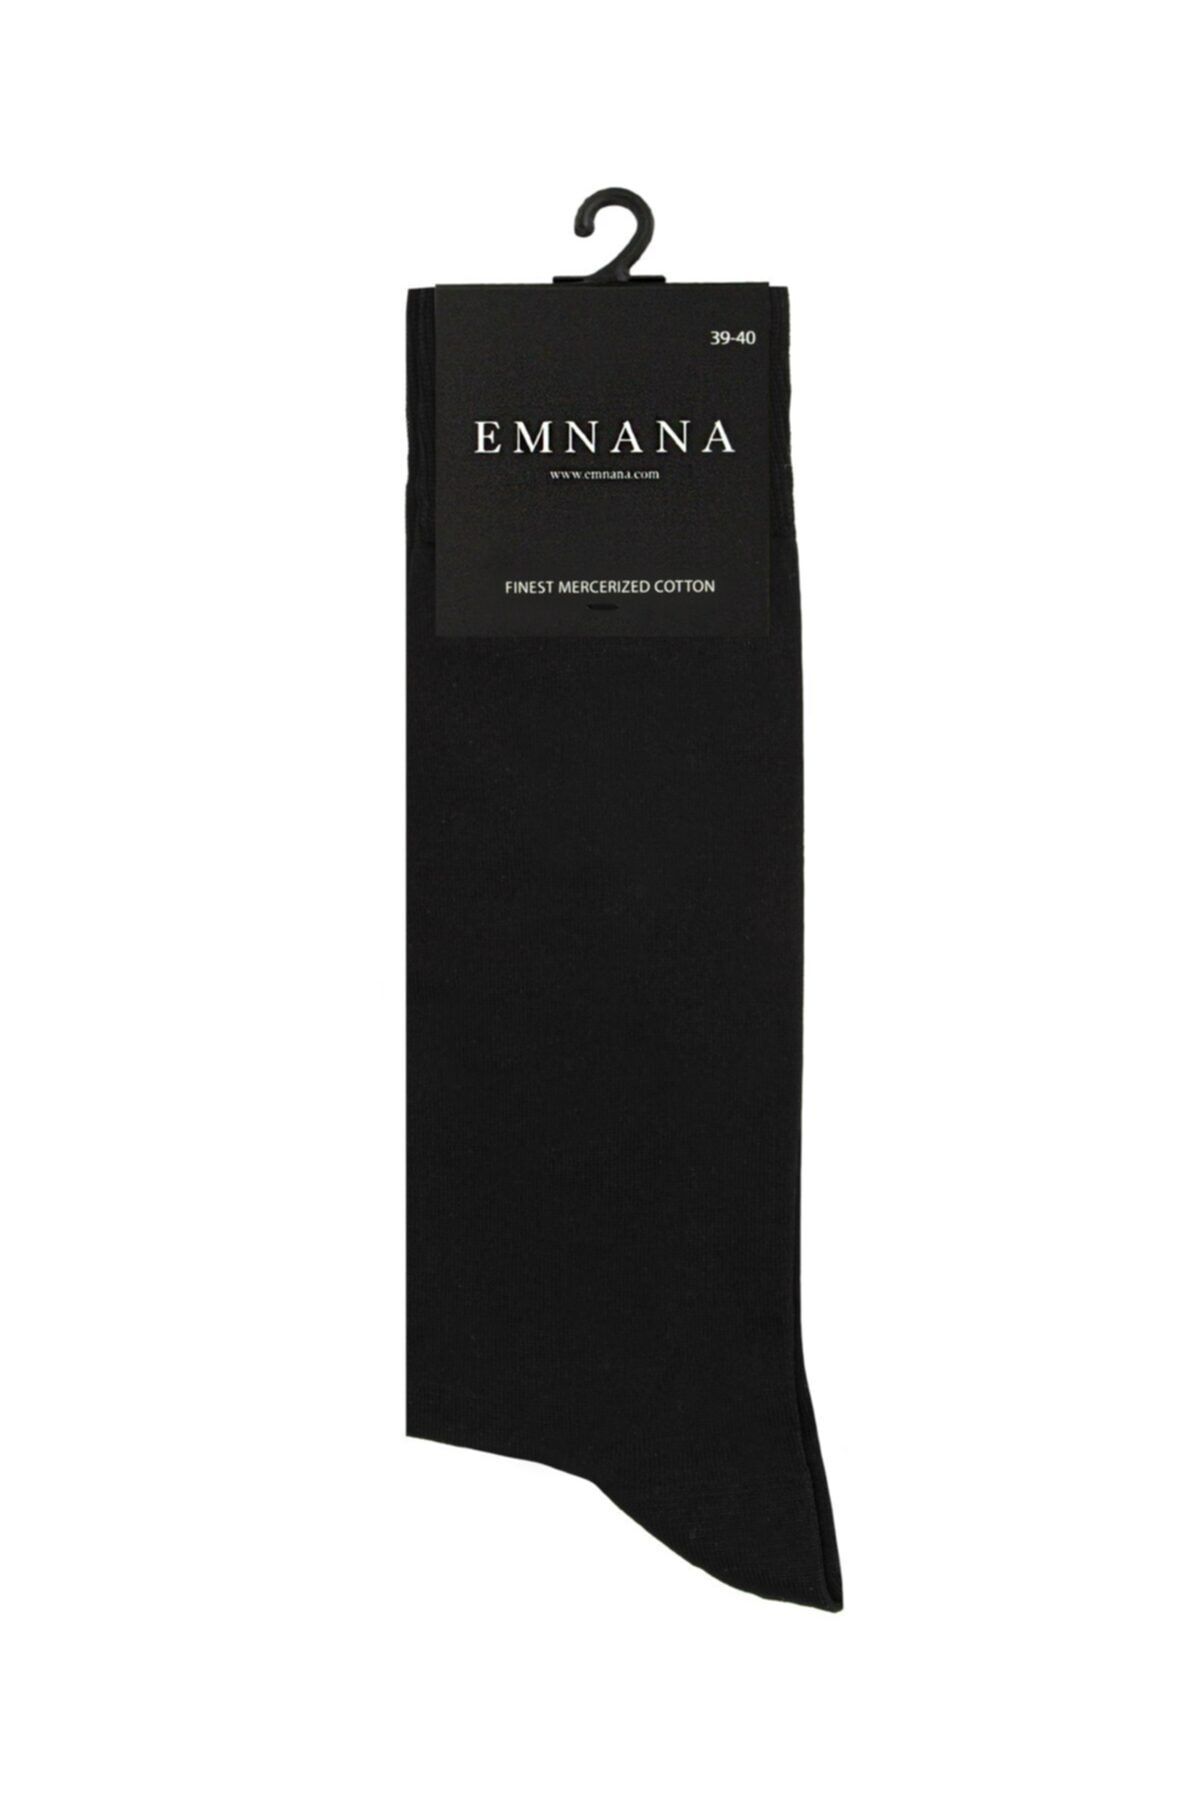 EMNANA 5 Adet Merserize Pamuk Erkek Çorap - Siyah